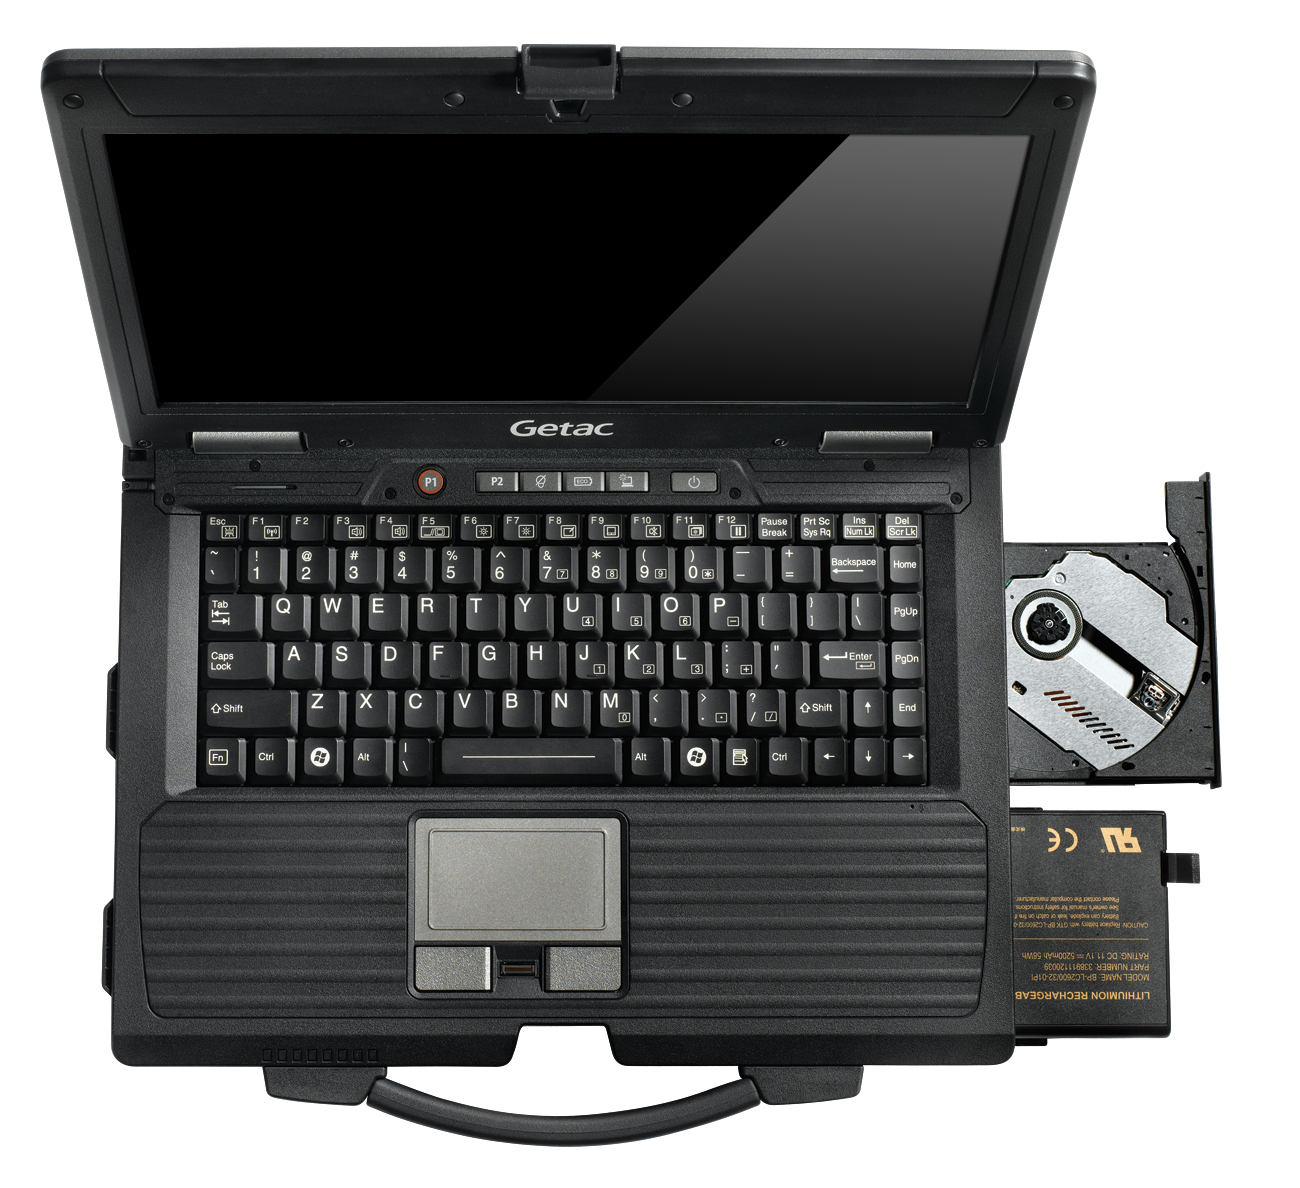 Getac: mocny laptop dla firm